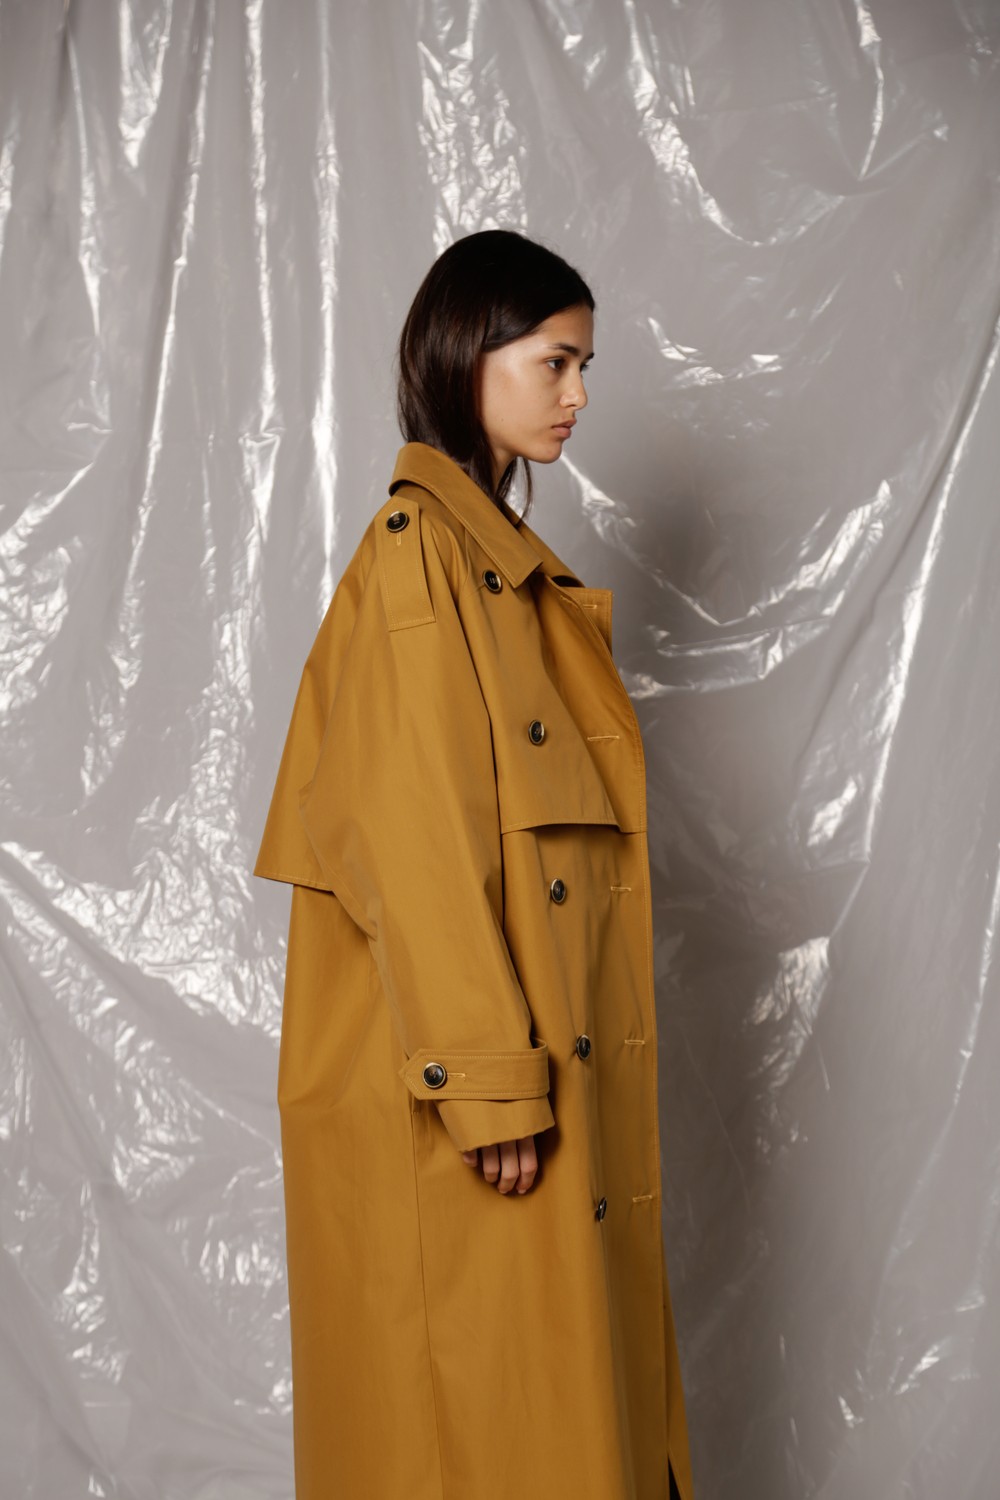 Trench coat in mustard